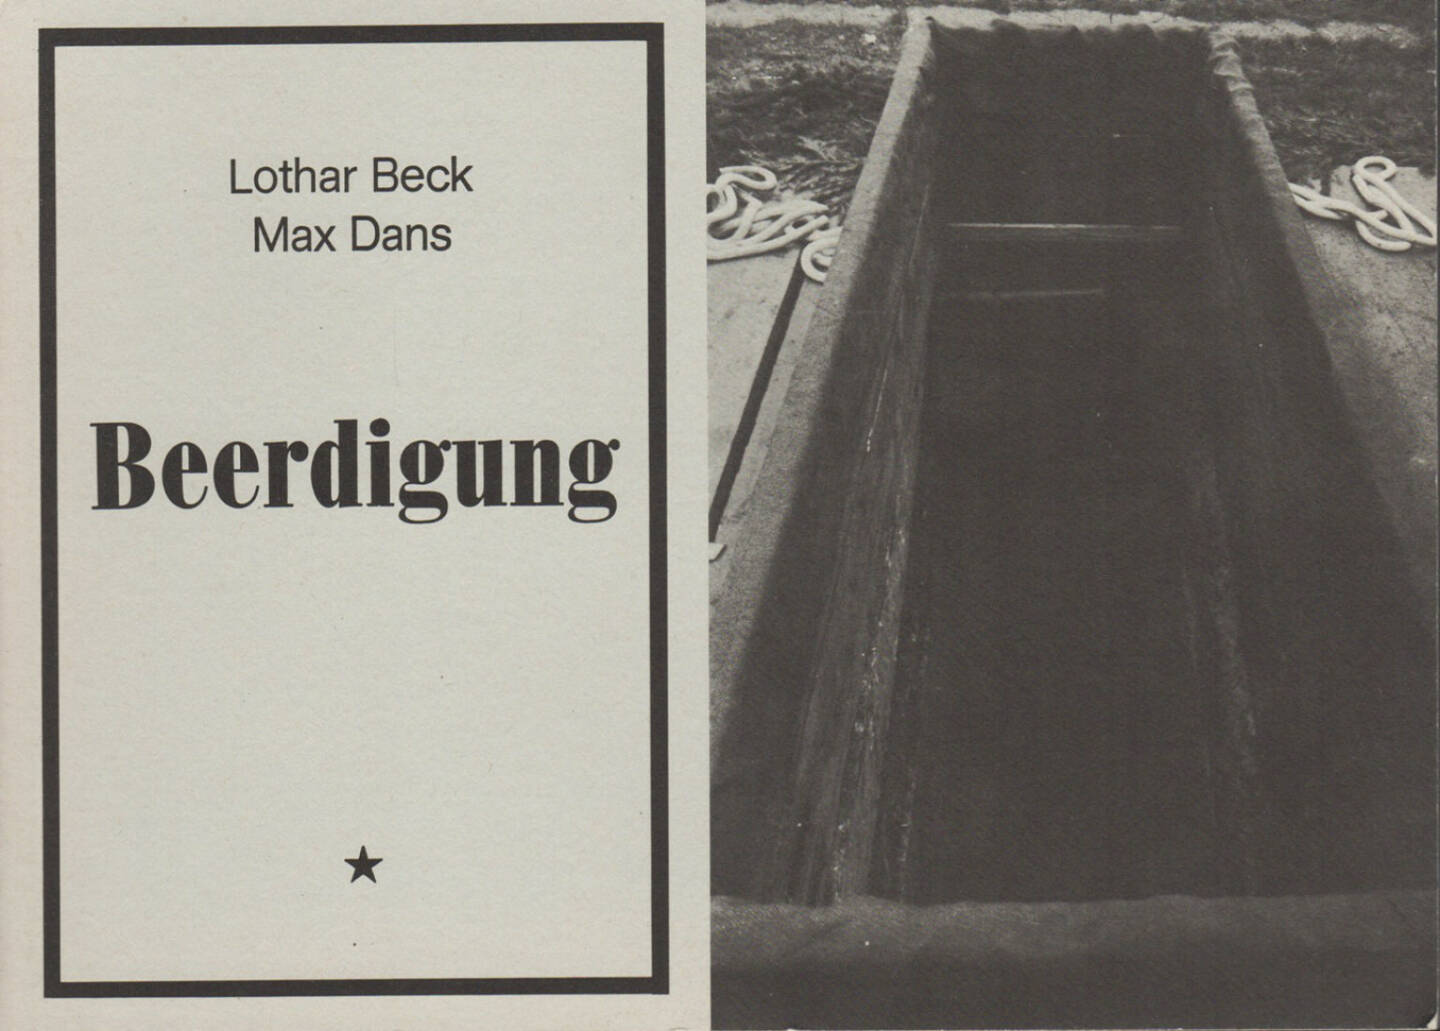 Lothar Beck & Max Dans - Beerdigung, Internationalismus Verlag 1977, Cover - http://josefchladek.com/book/lothar_beck_max_dans_-_beerdigung